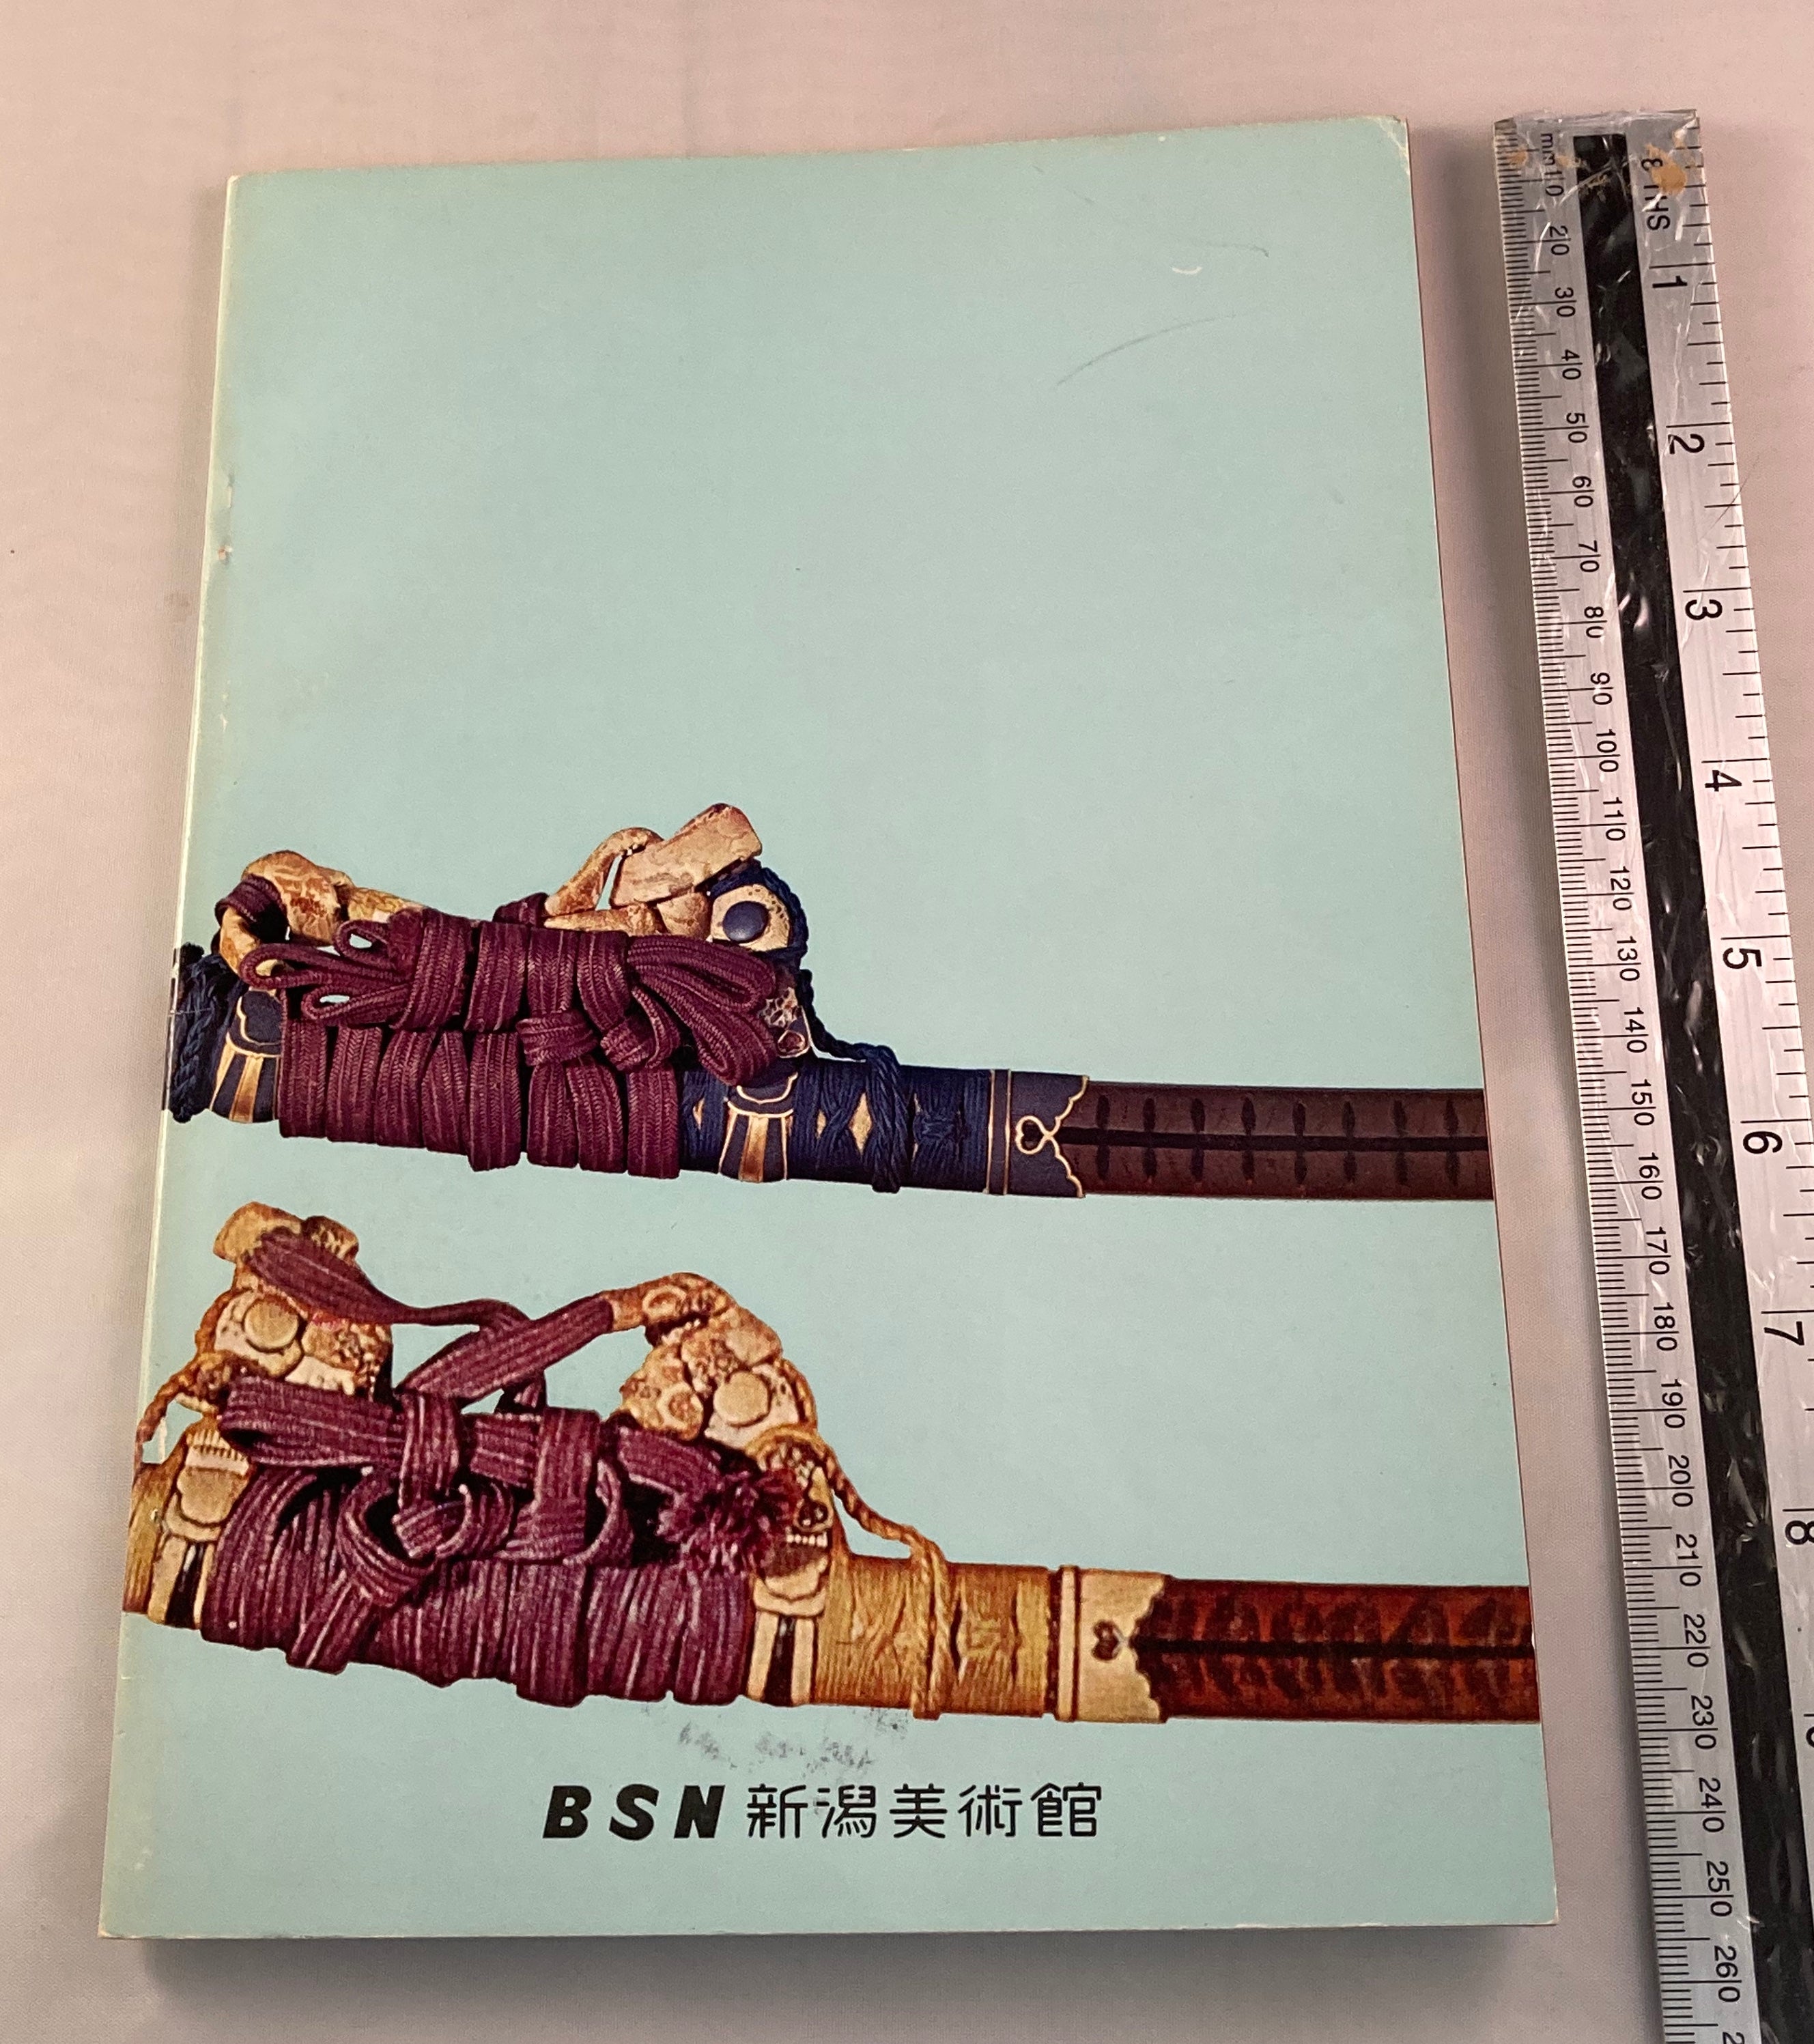 Swords ( Japanese text) - Yamazakura